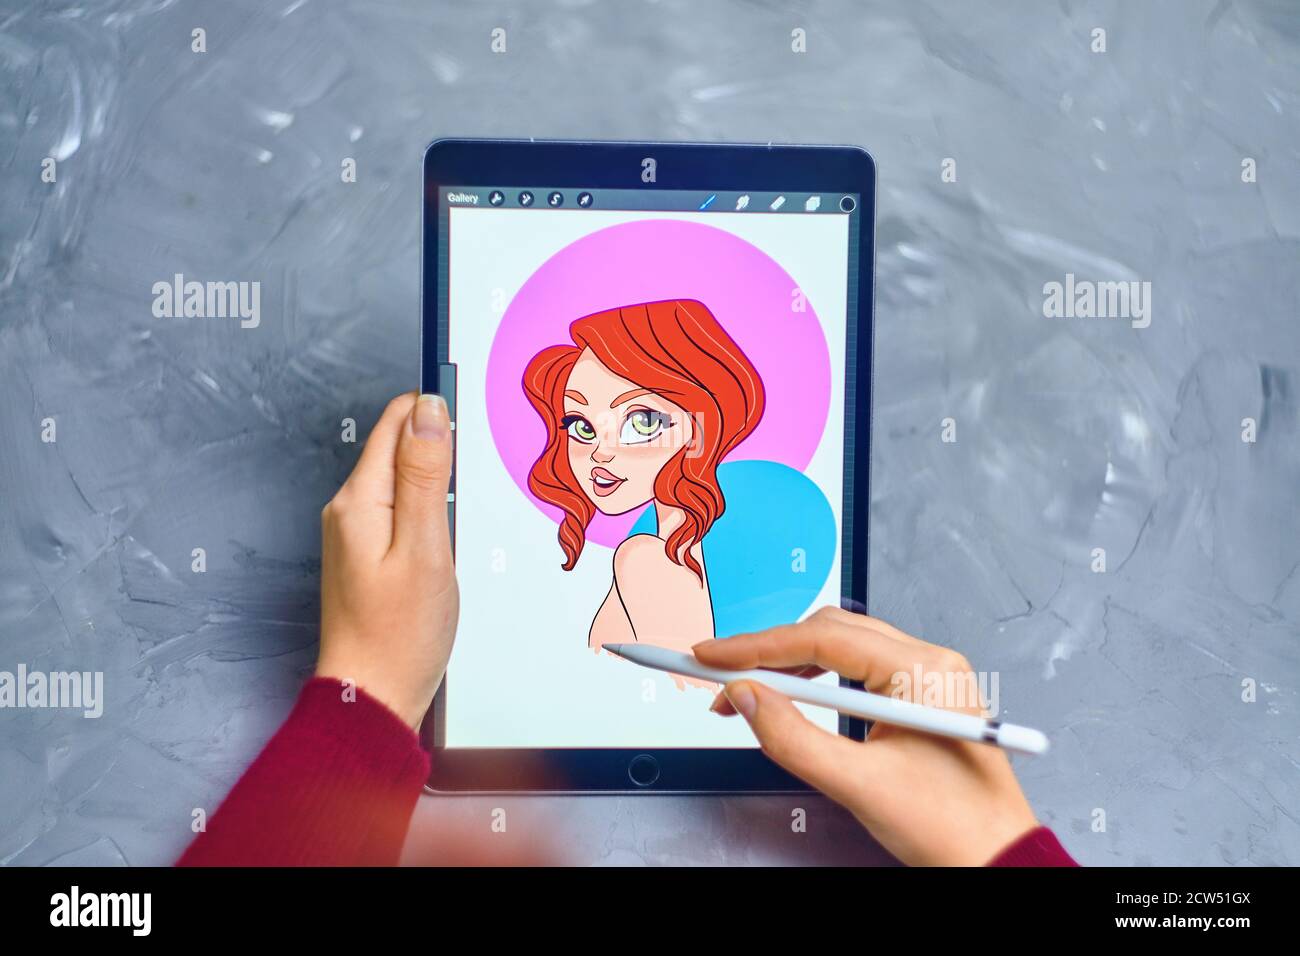 Woman Illustrator Draws A Portrait Of A Girl On An Ipad Pro In Procreate App Using Apple Pencil Digital Illustrator Freelance Work As A Designer Bishkek Kyrgyzstan January 21 19 Stock Photo Alamy